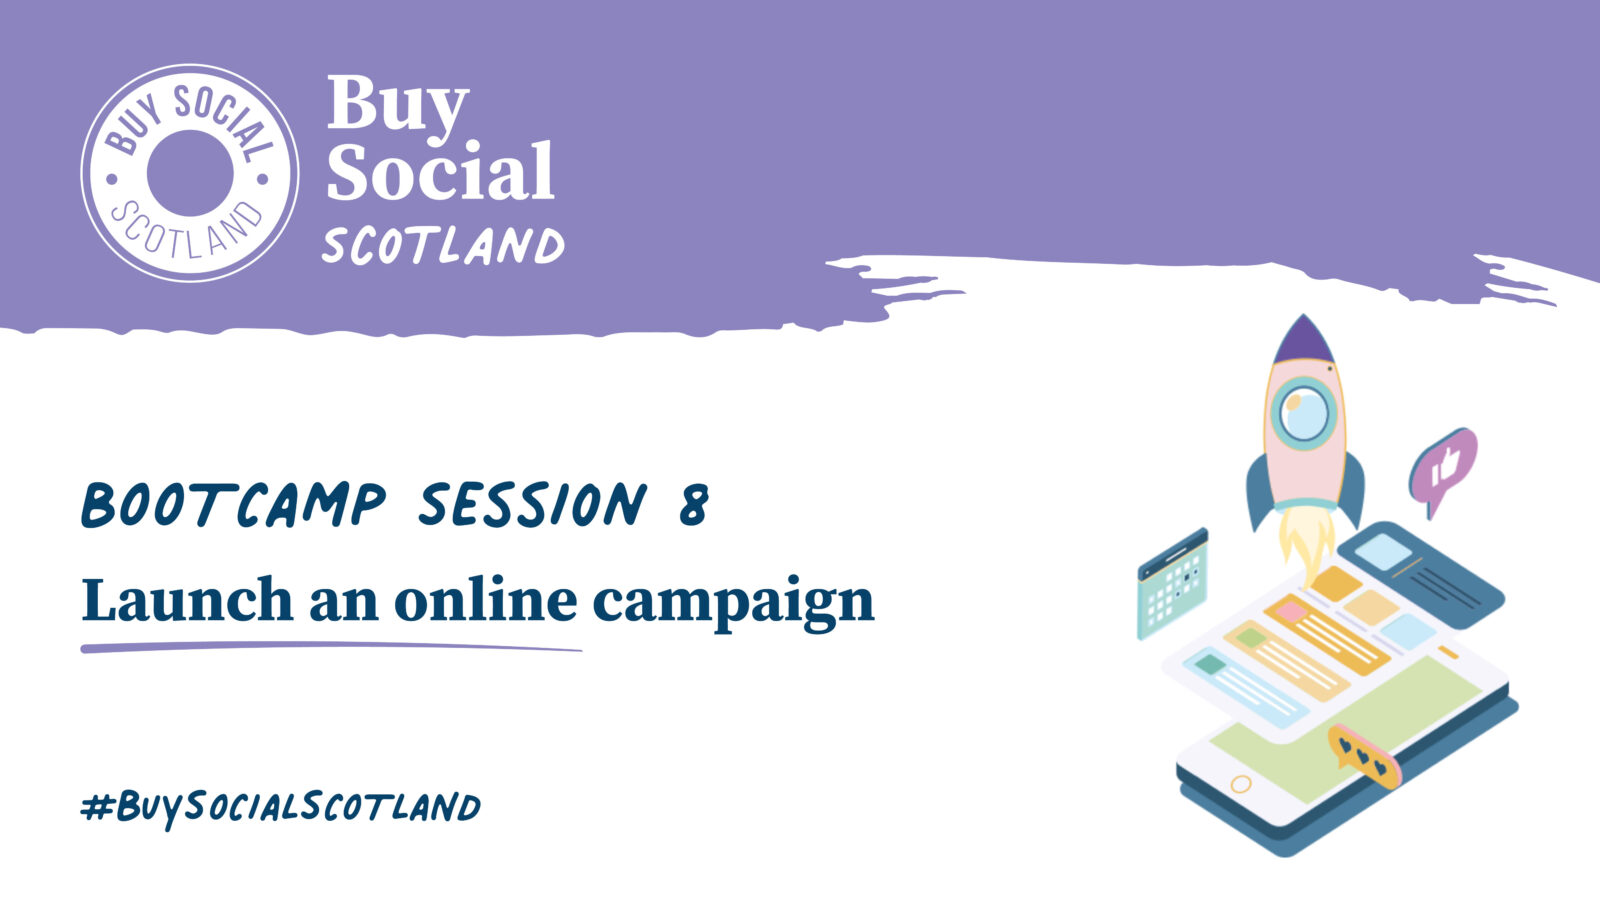 Buy Social Scotland Bootcamp Session 8